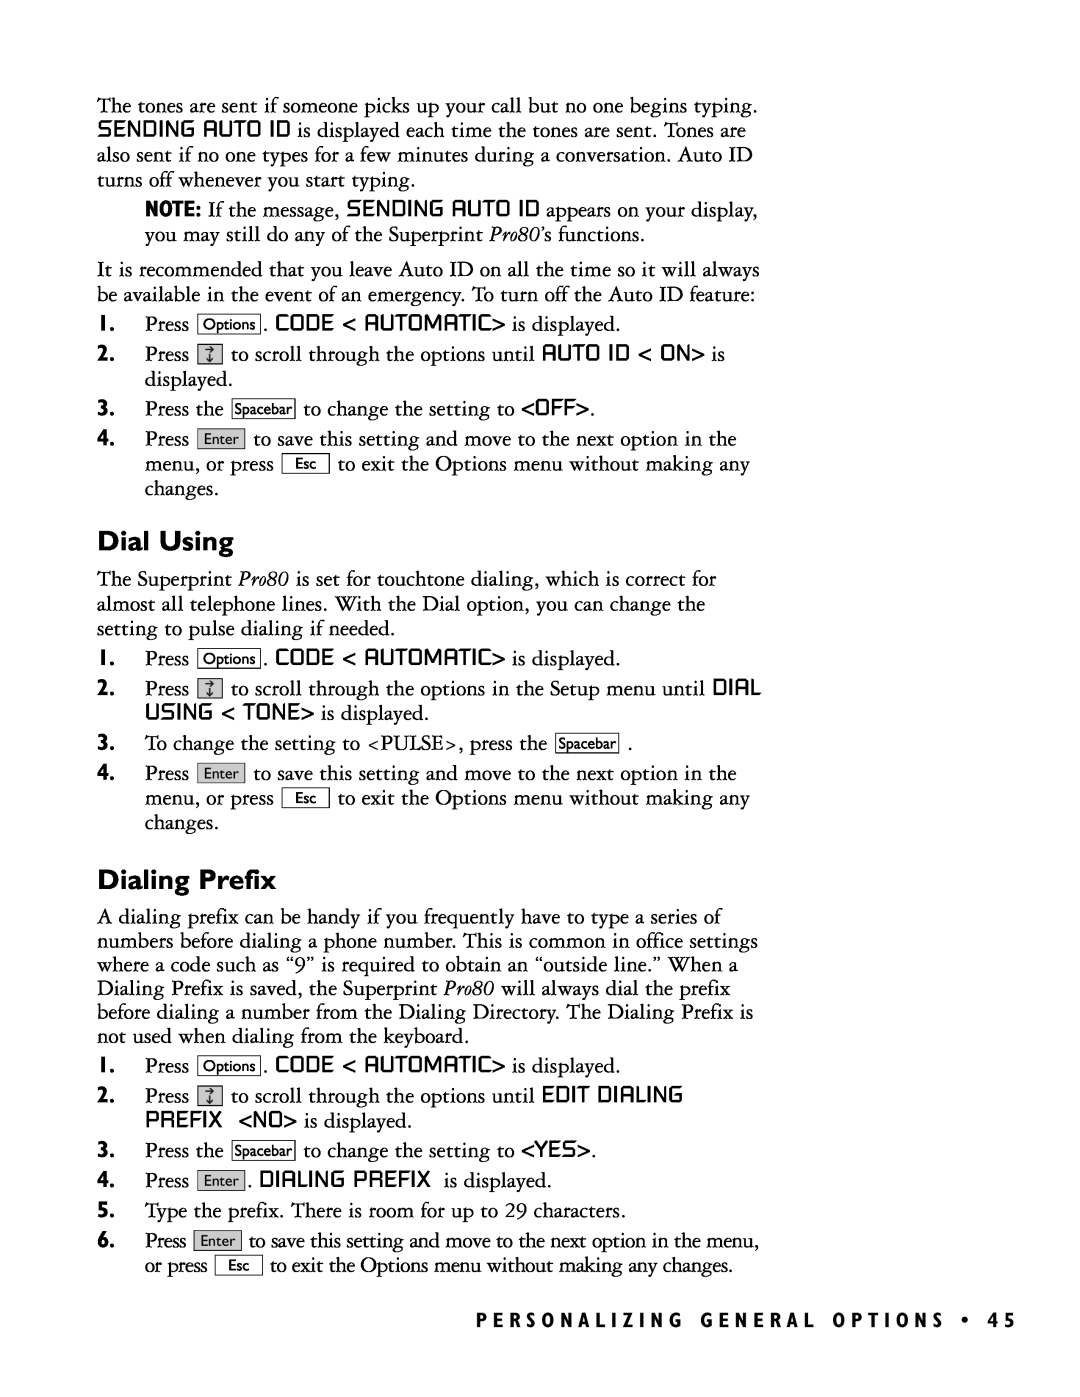 Ultratec PRO80TM manual Dial Using, Dialing Prefix 